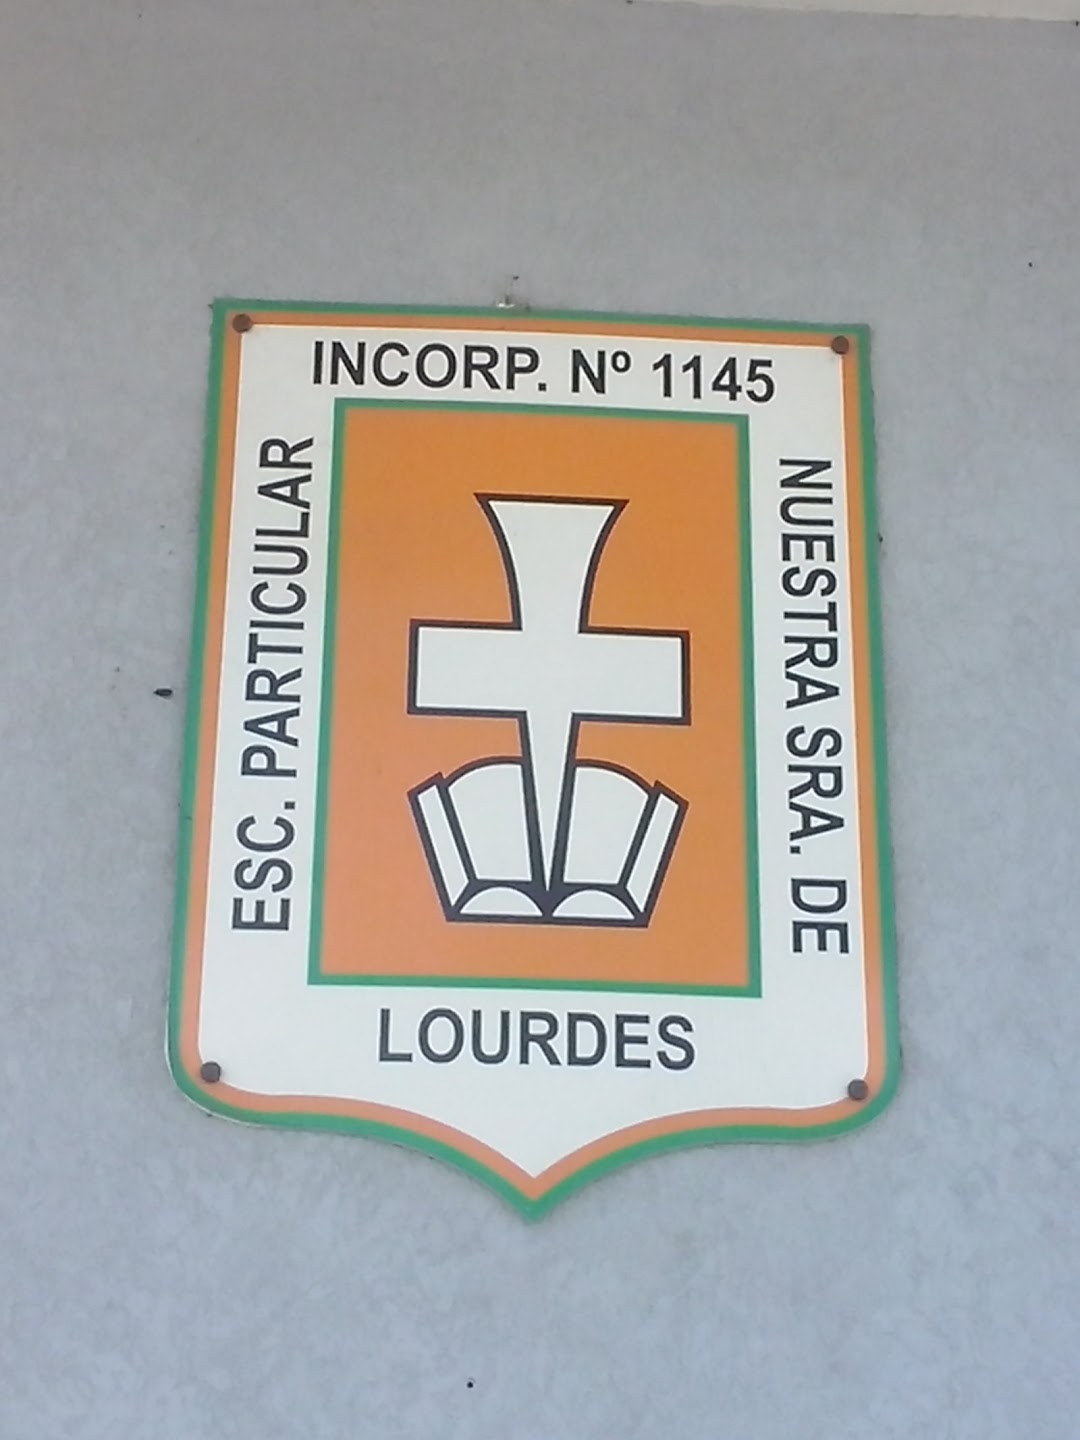 Escuela Particular Incorporada Nro 1145 Ntra Sra de Lourdes